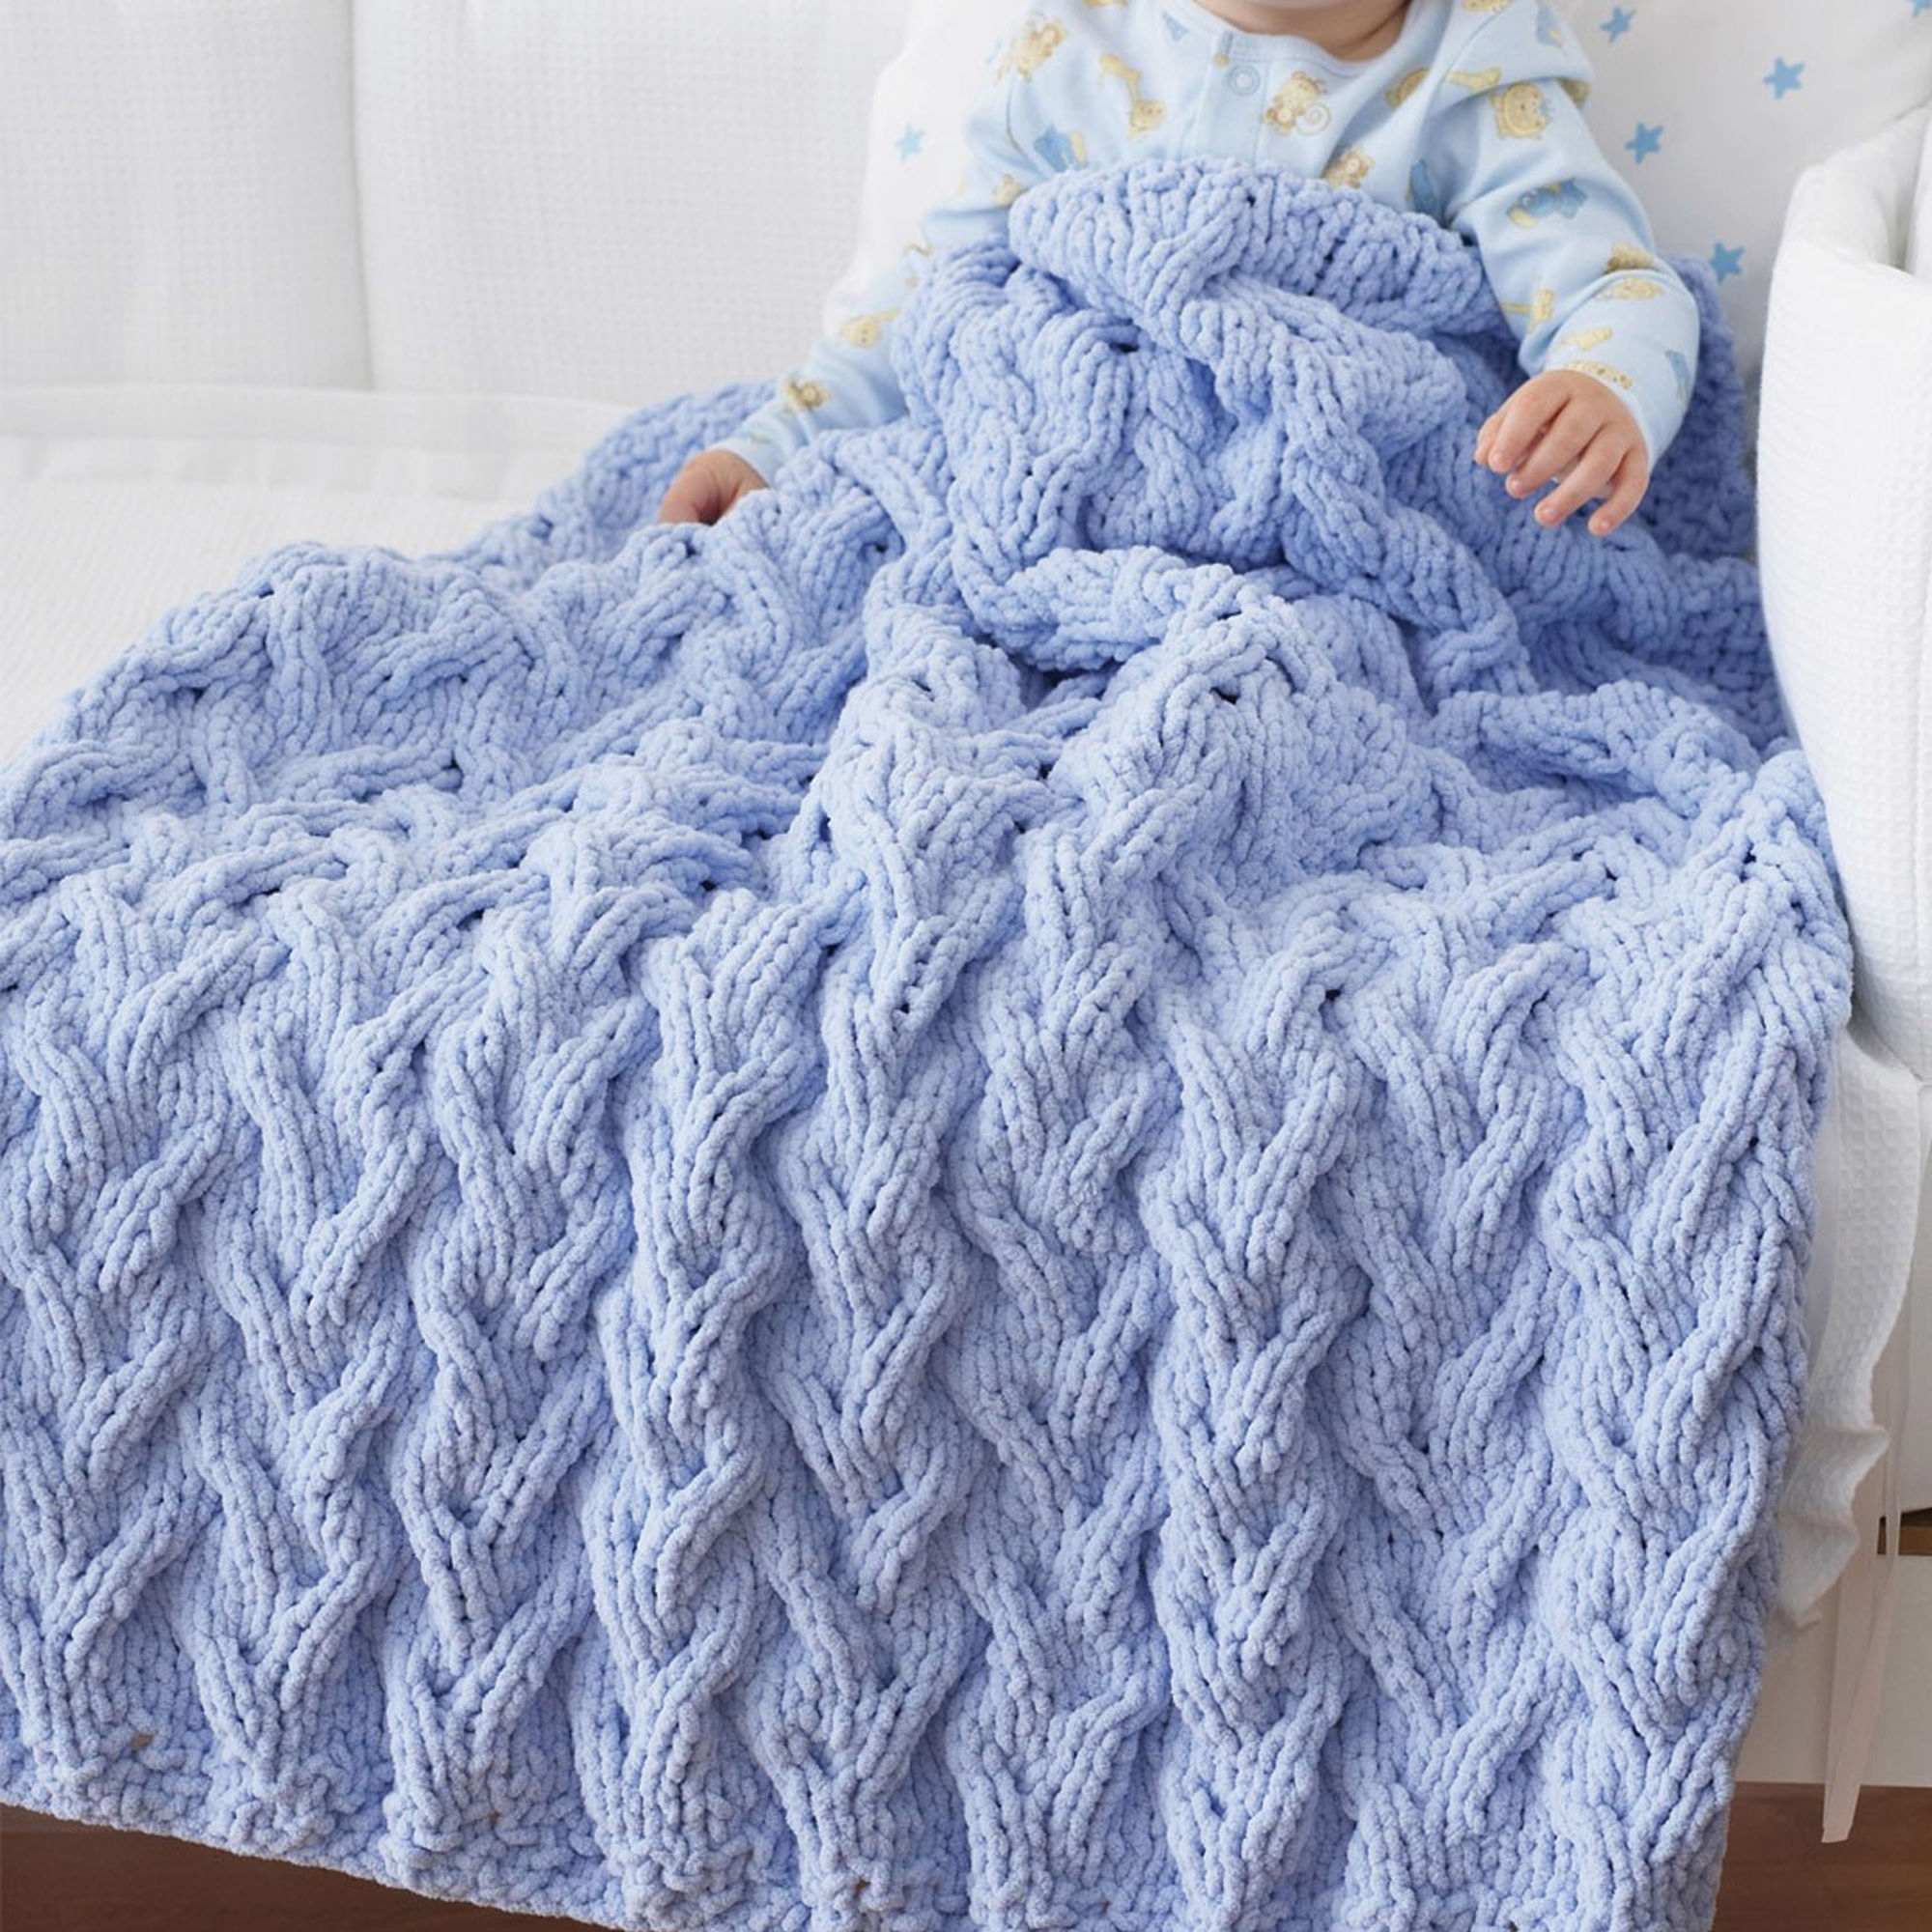 Knitting Pattern For Baby Blankets Lovely Cabled Ba Blanket Free Knitting Pattern